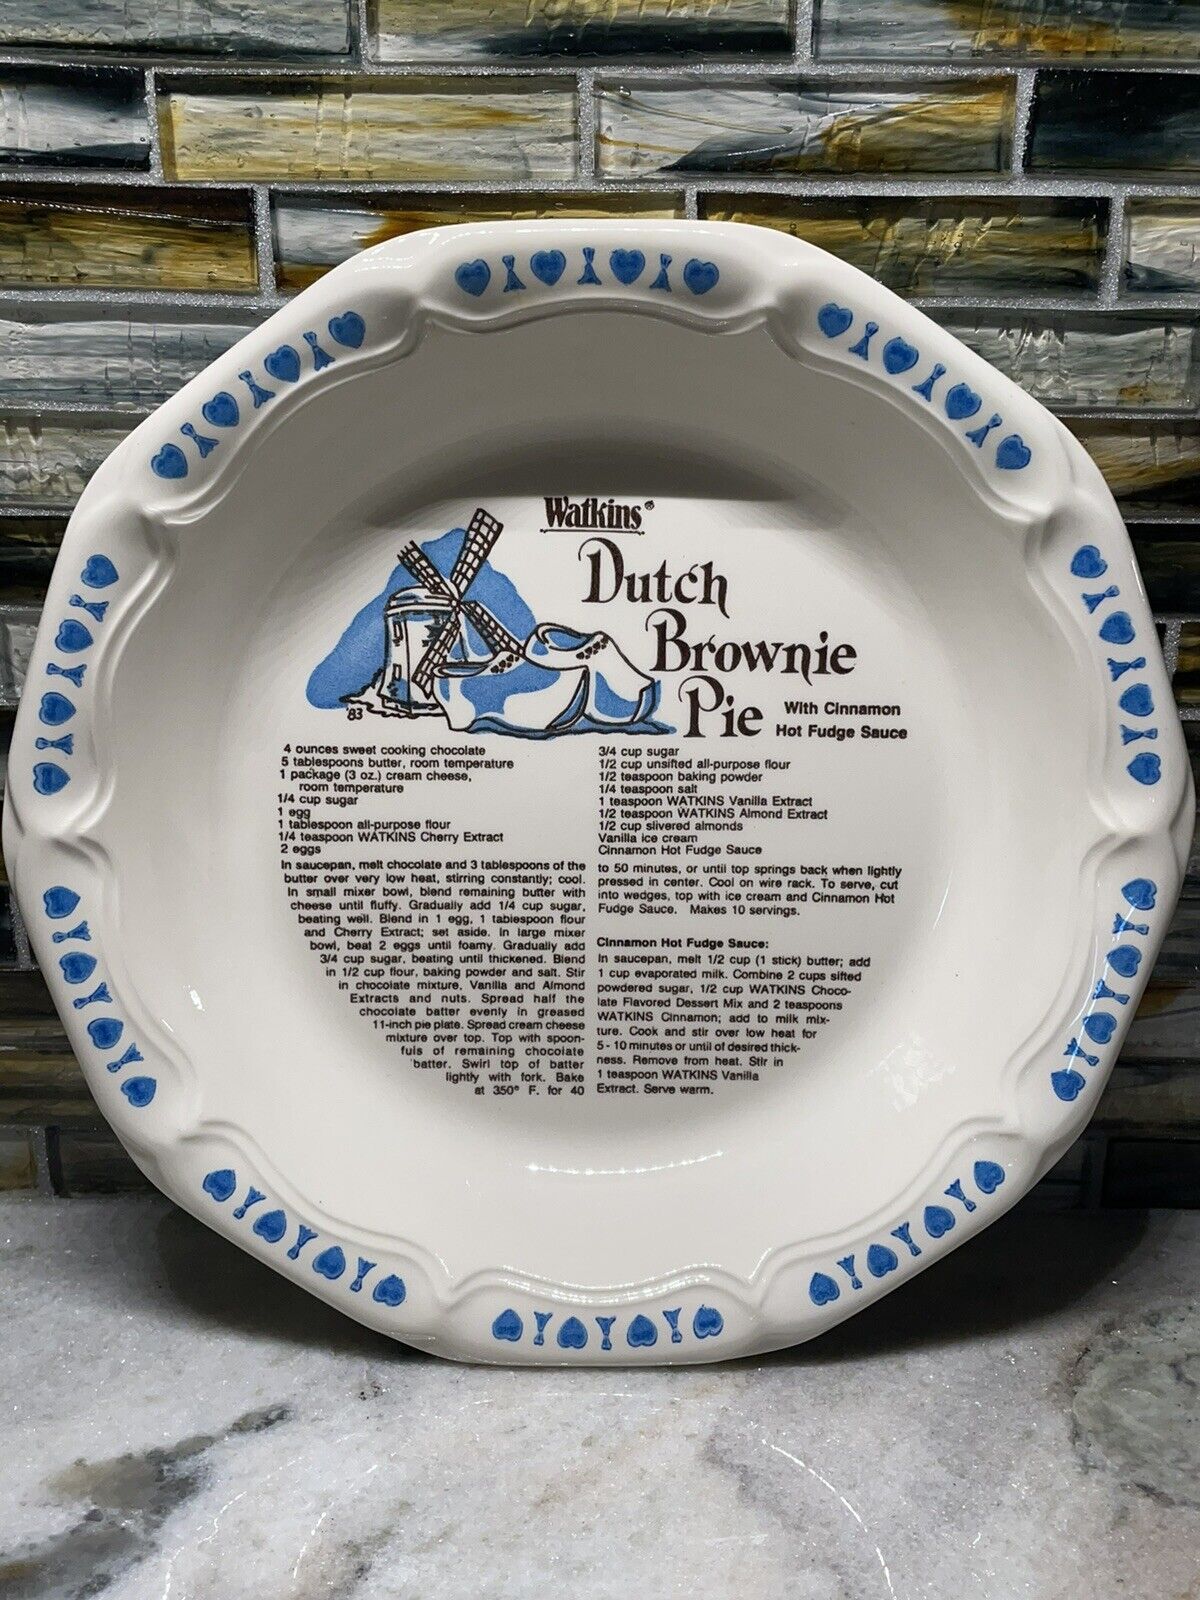 Vintage 1983 Watkins Dutch Brownie Pie Ceramic Plate Dish Recipe Made In USA